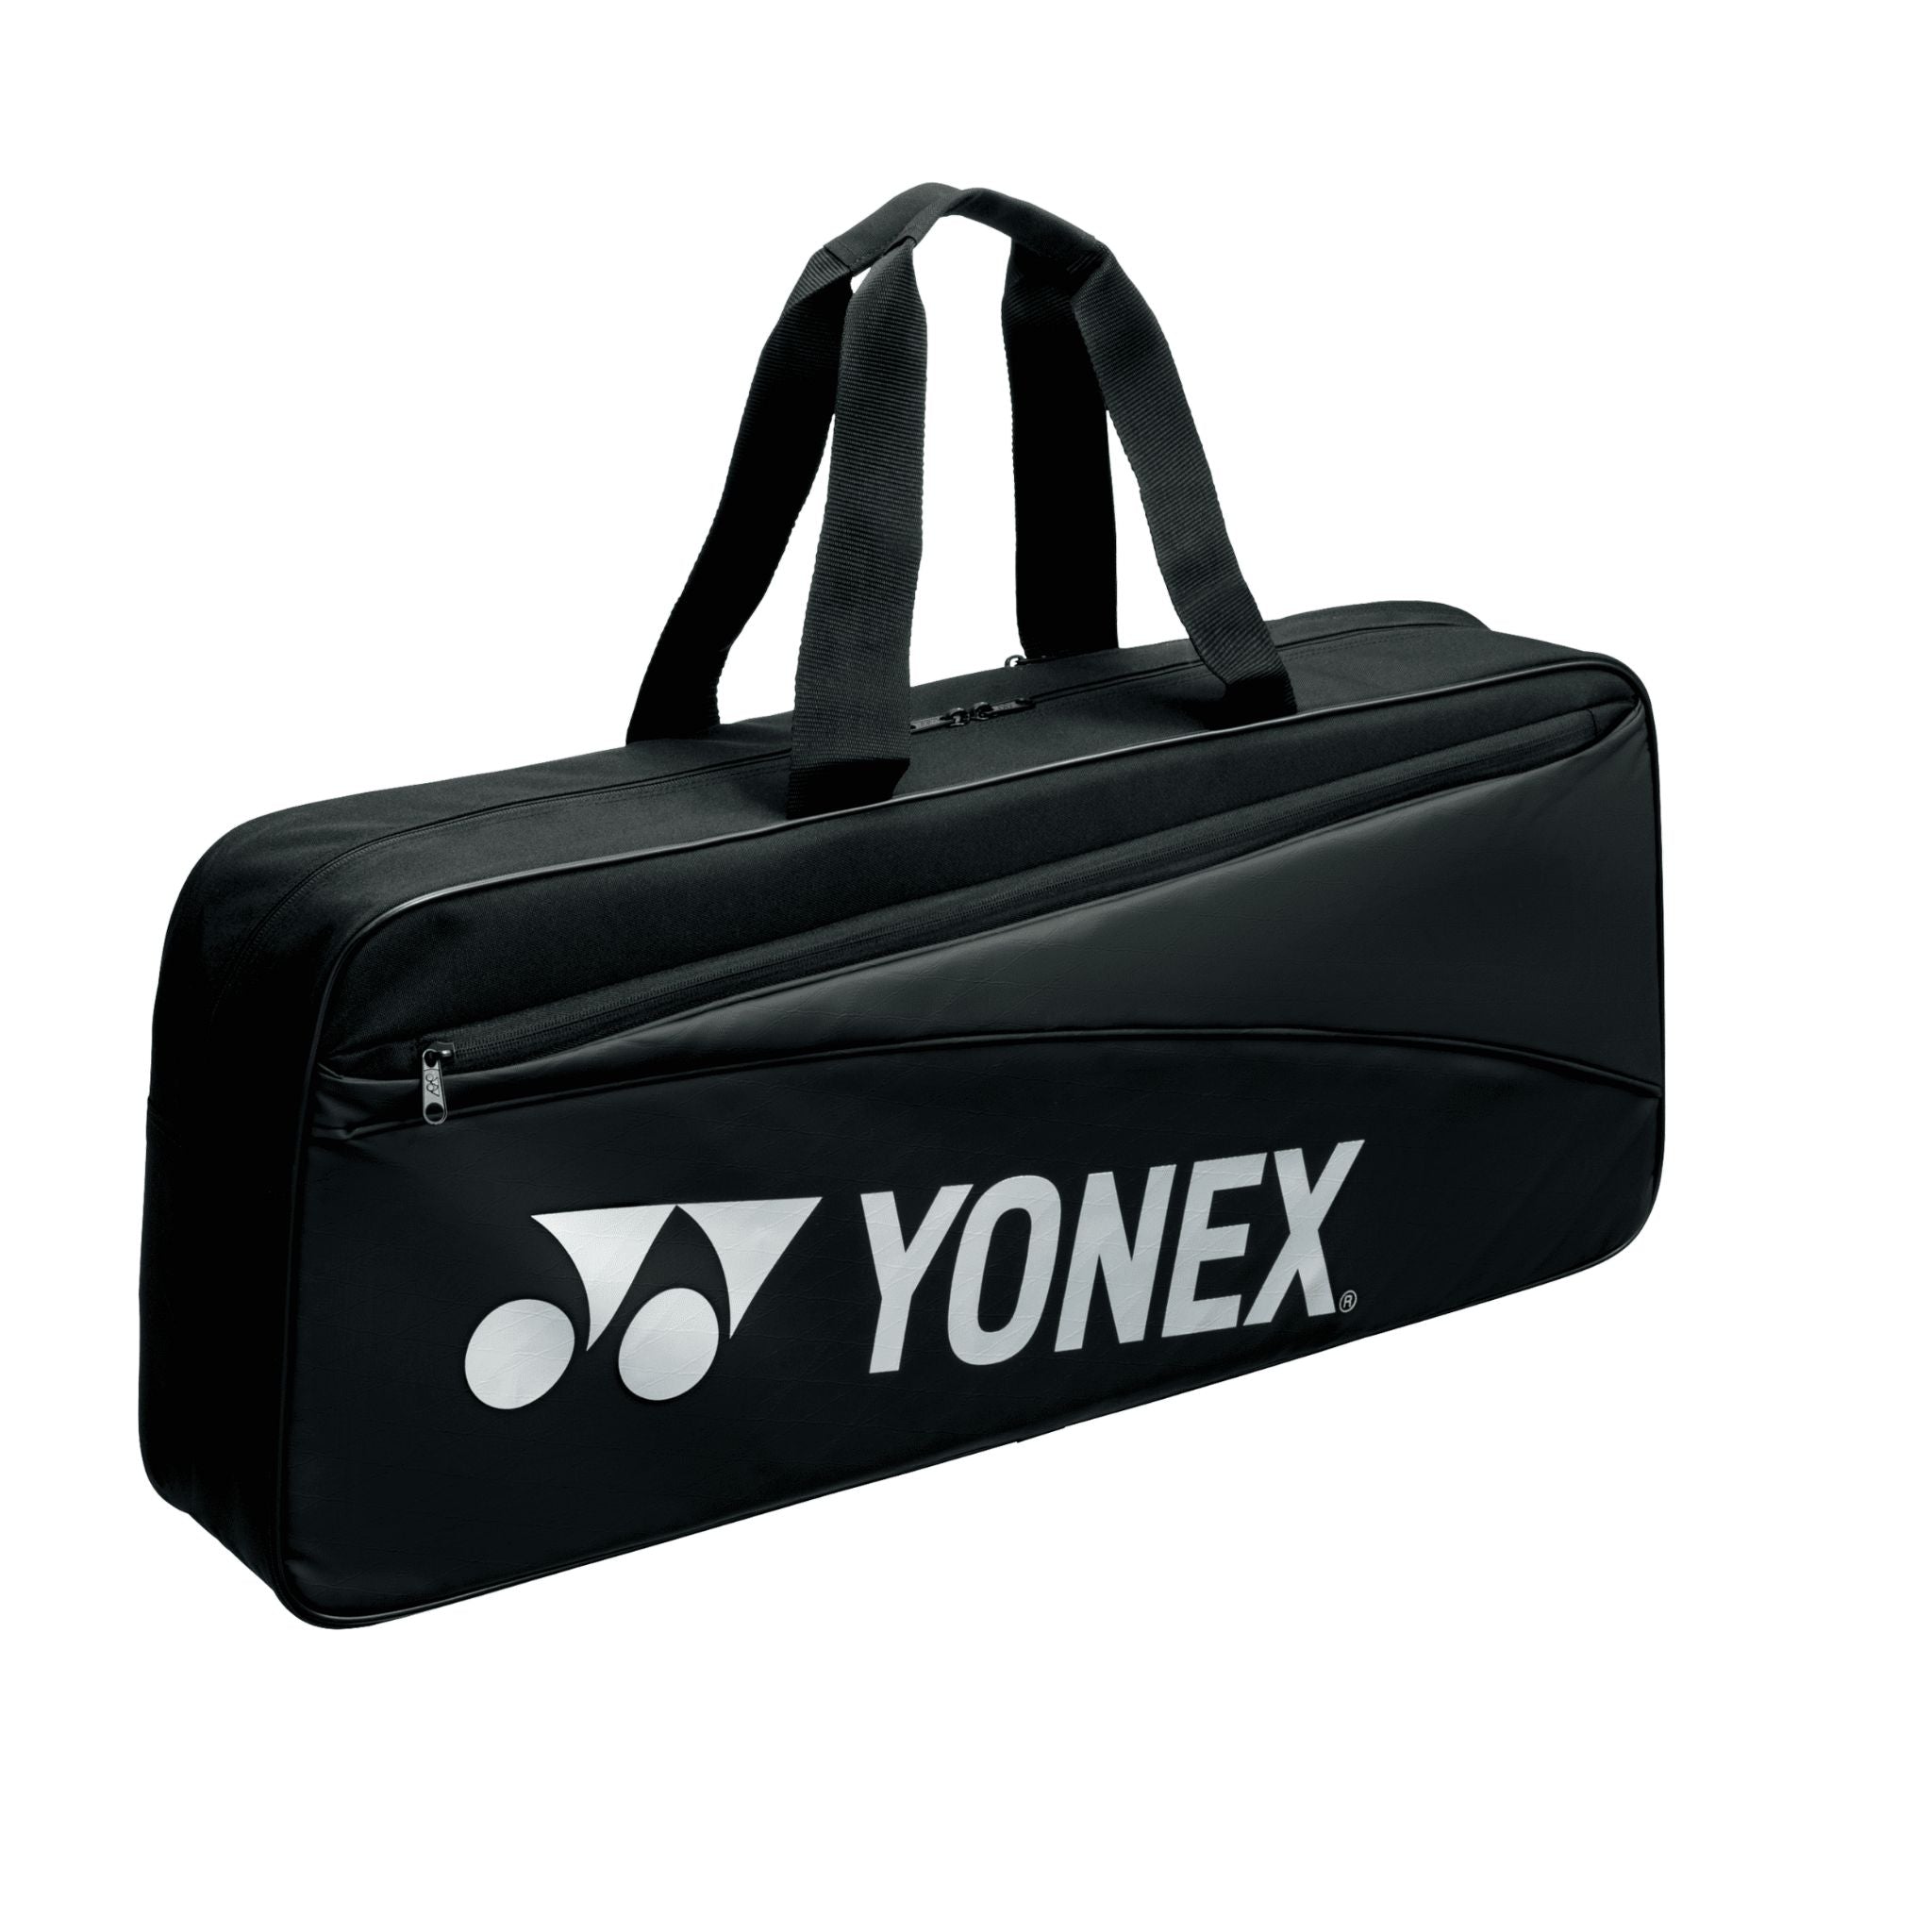 Yonex 2 Compartments Thermal Tournament Team Badminton Racket Bag LRB05MSB6